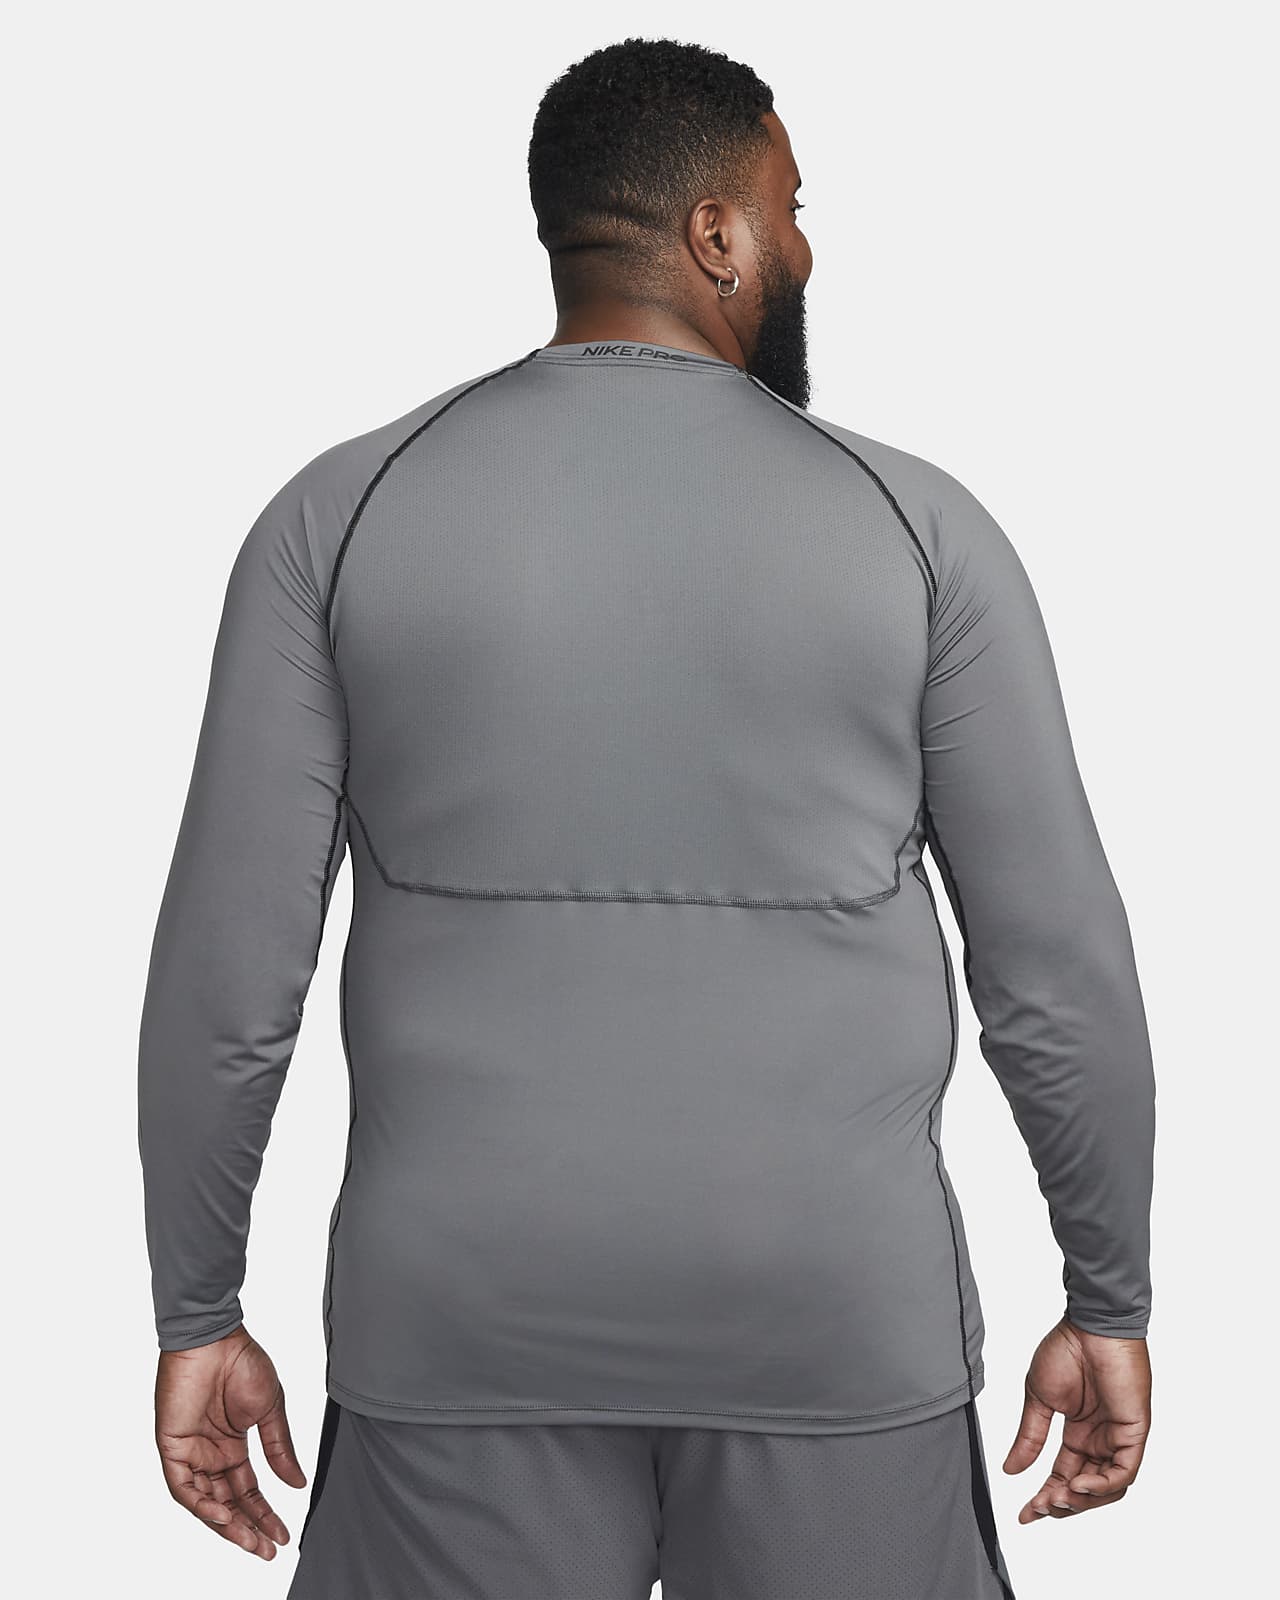 Nike Pro NBA Longsleeve Compression Shirt Size XXLT Black NWT